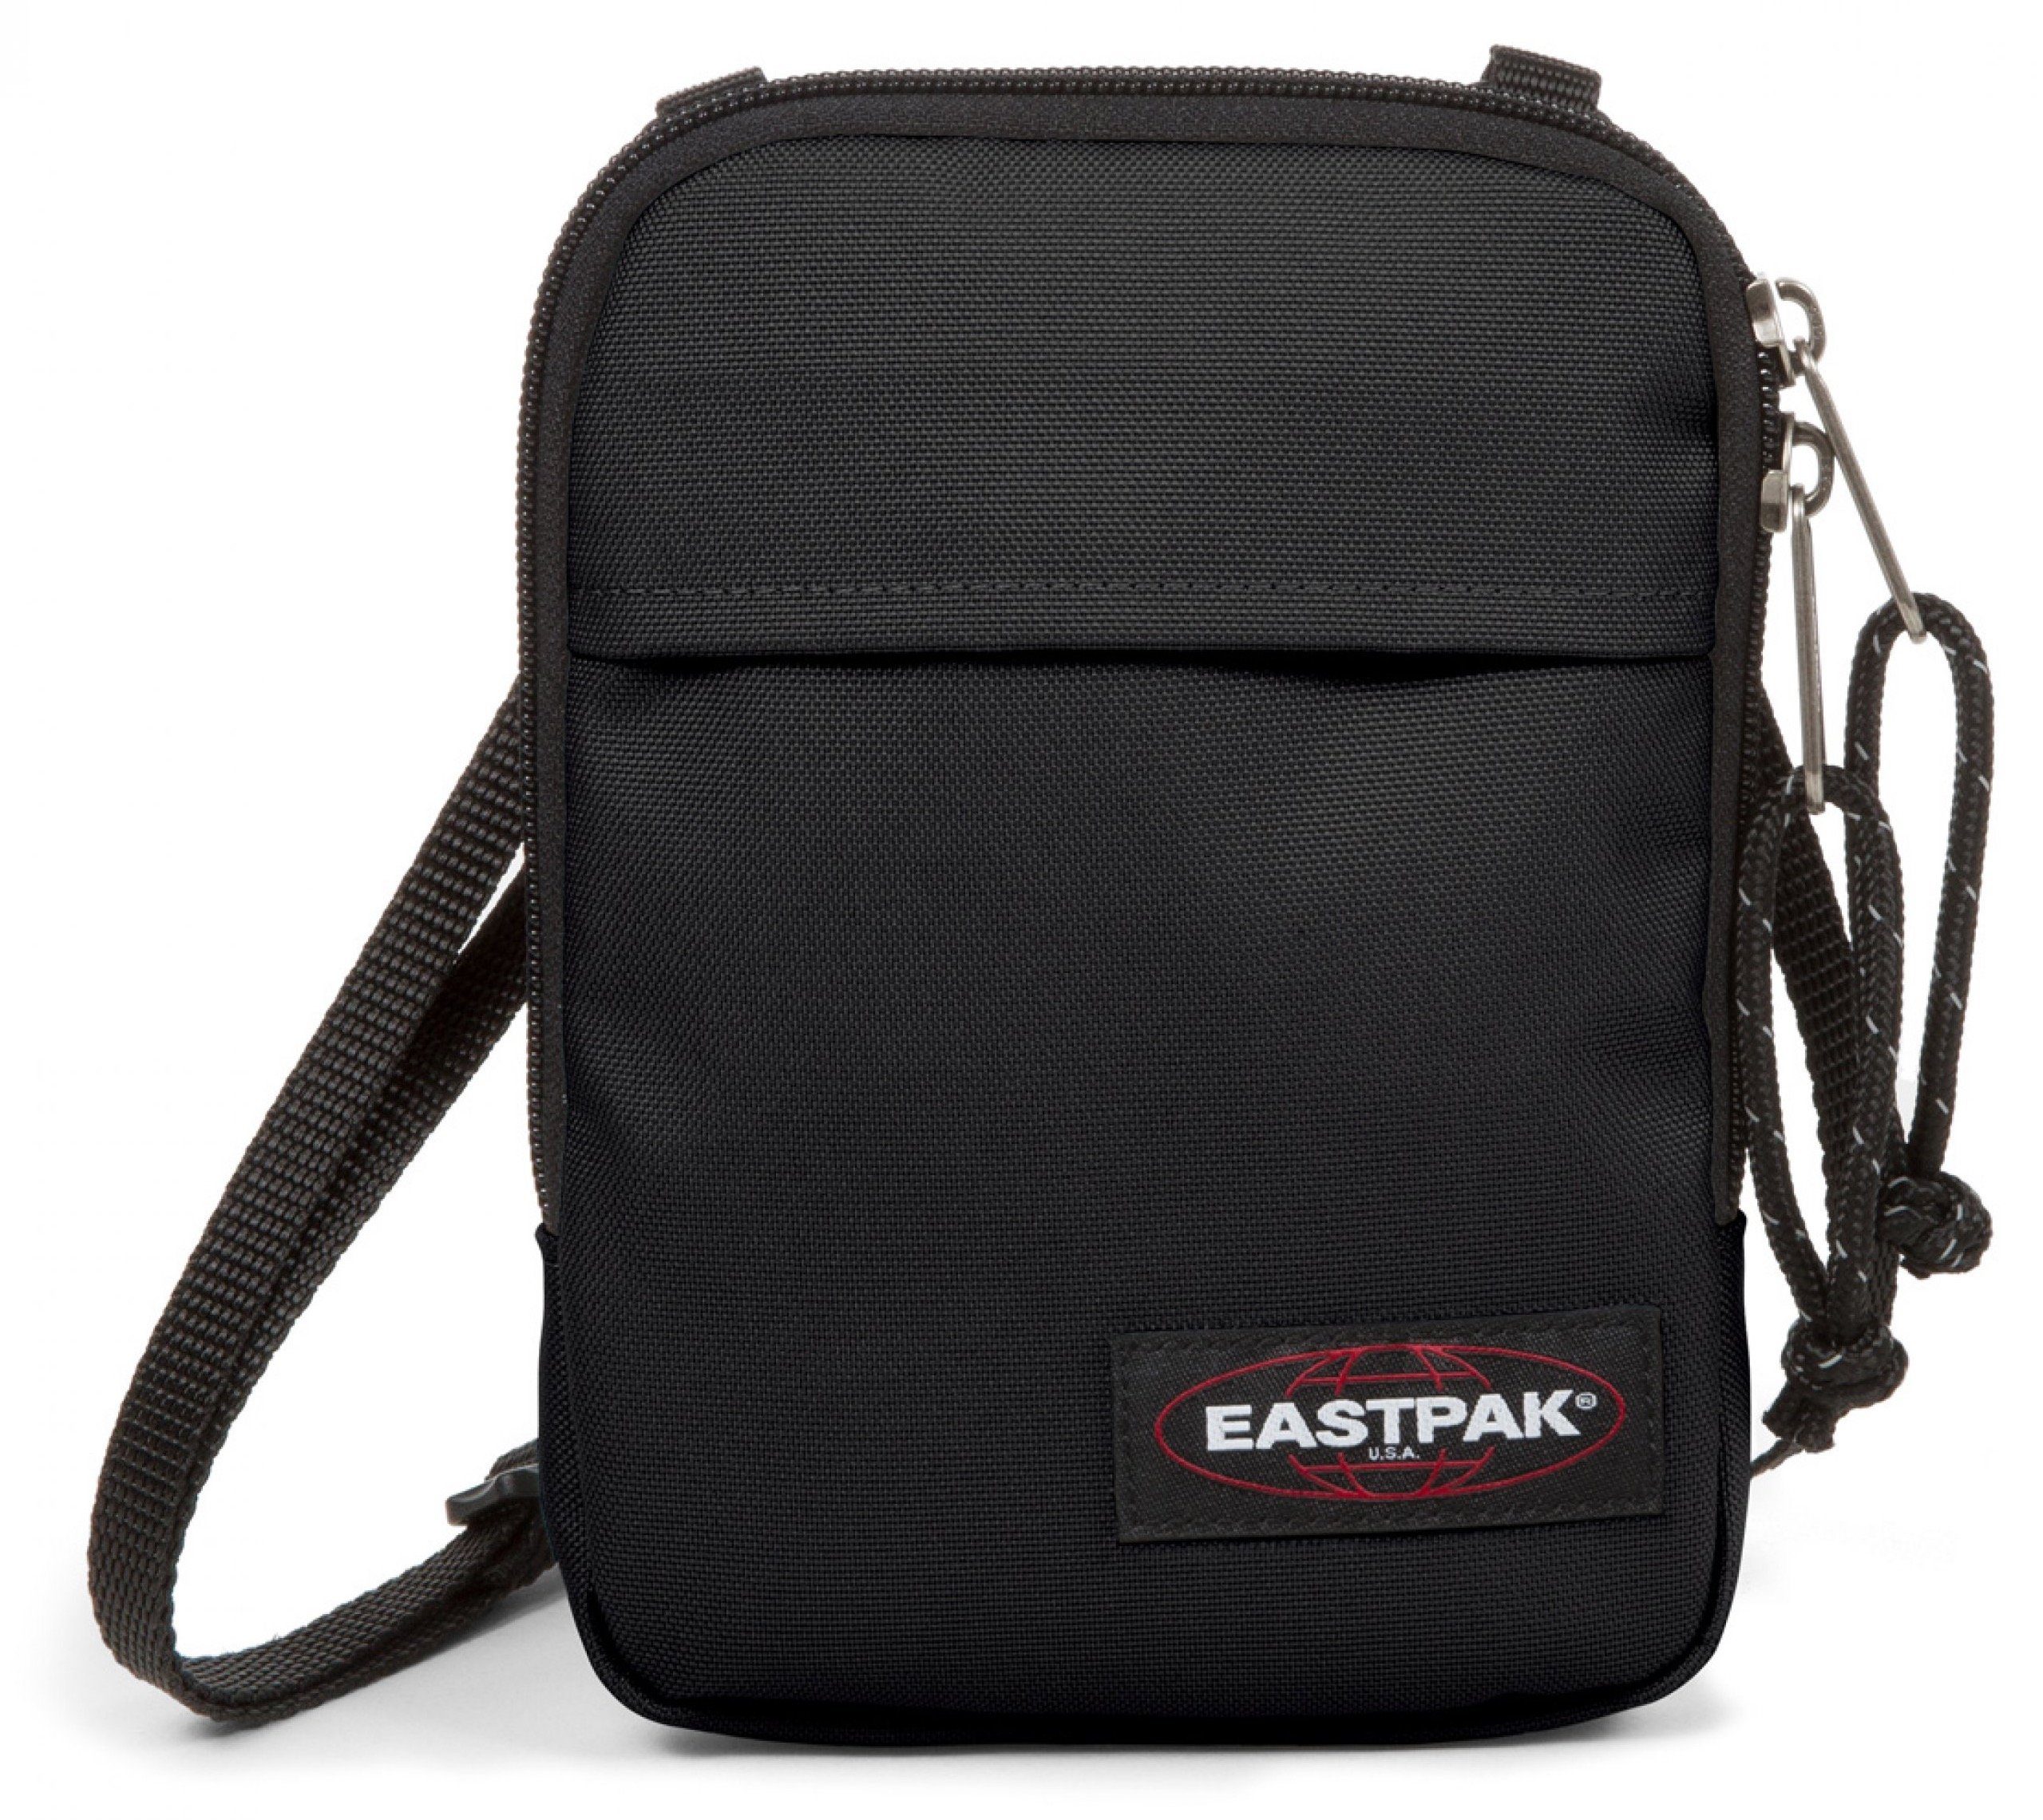 Eastpak Mini Bag BUDDY online kaufen | OTTO